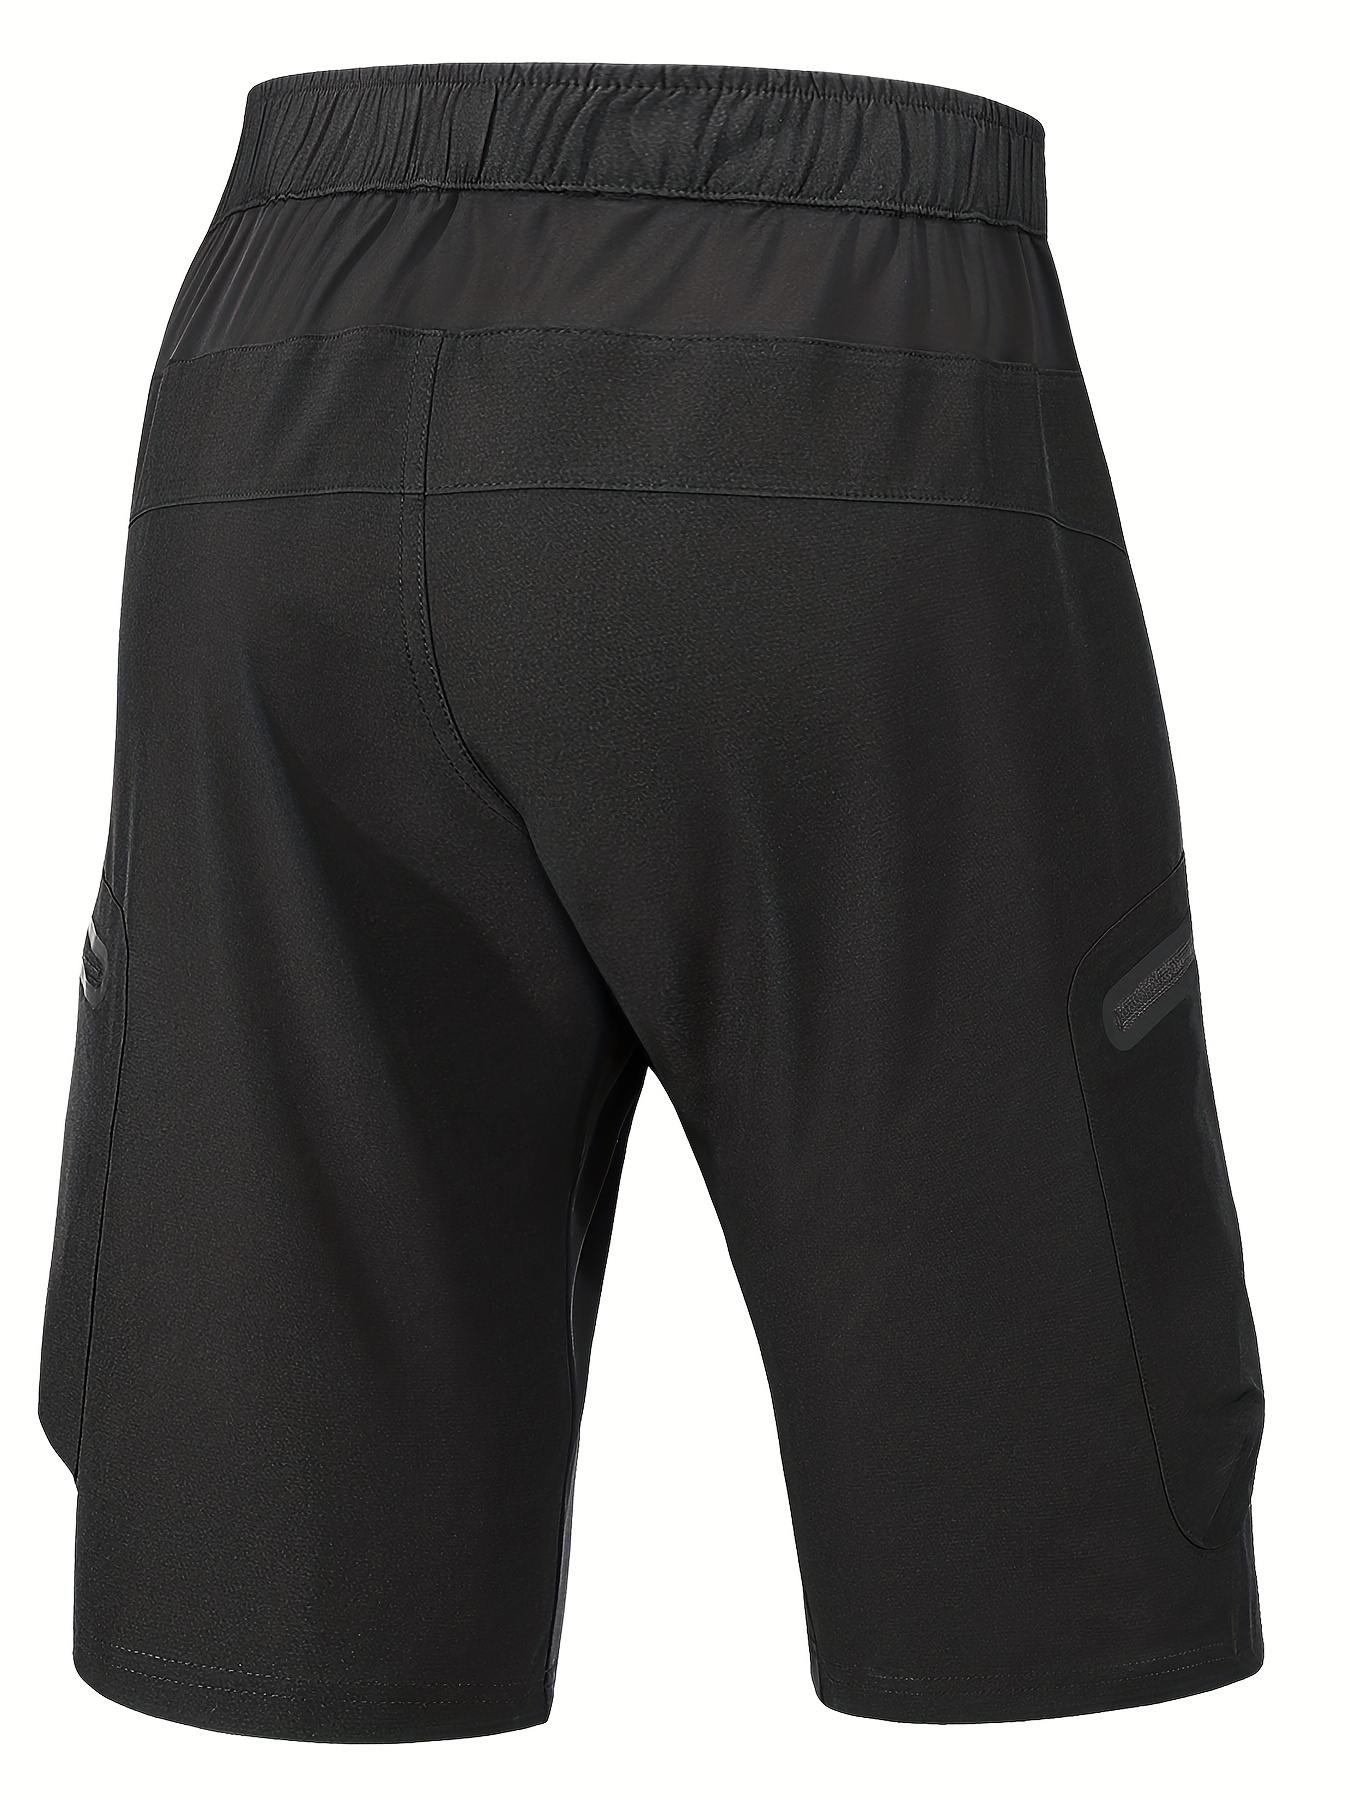 Workout Shorts Men Men's Hiking Cargo Shorts Quick Dry Golf